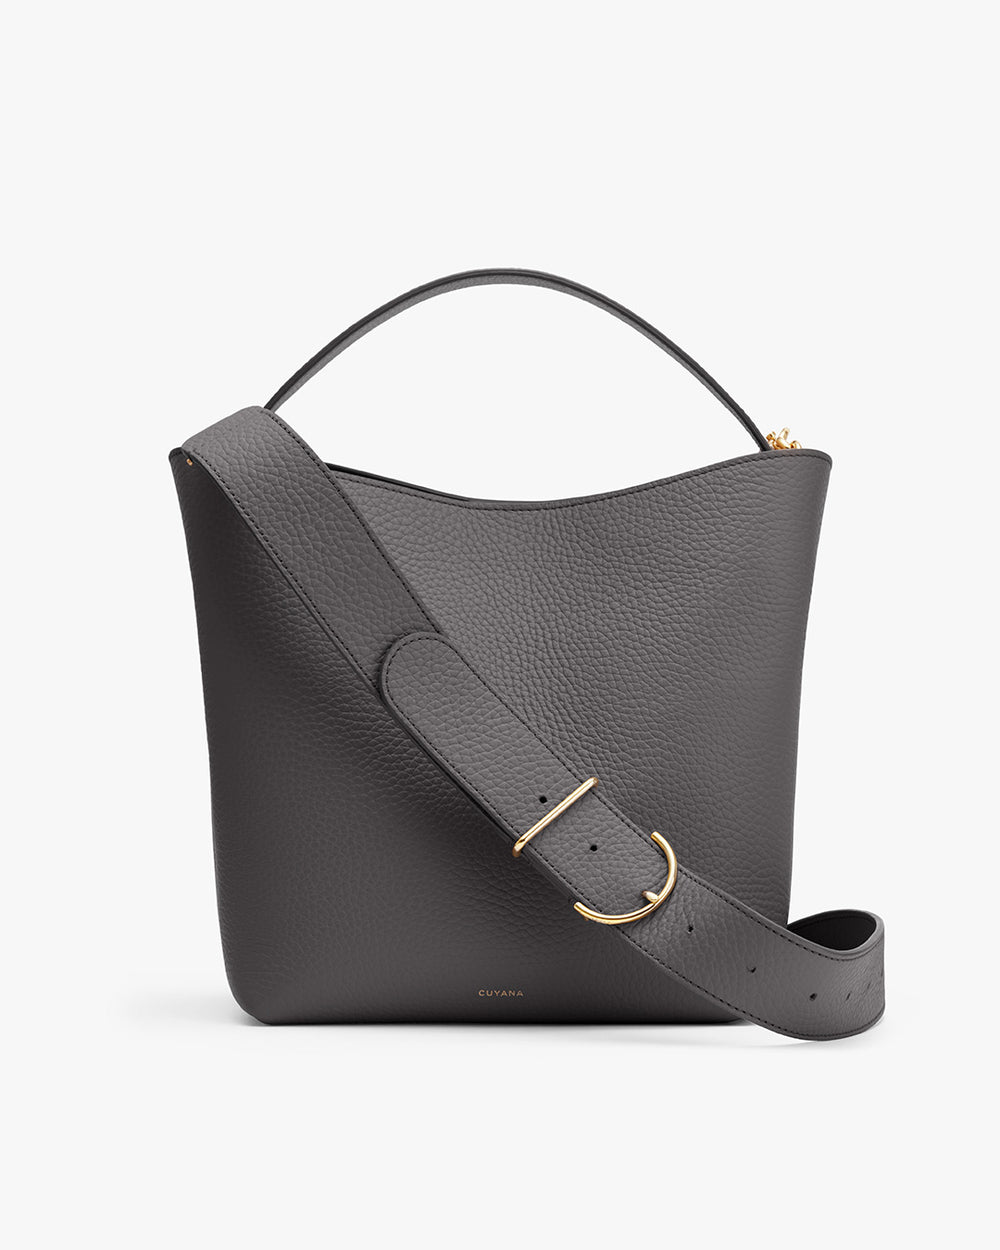 Handbag with shoulder strap and metal ring detail.